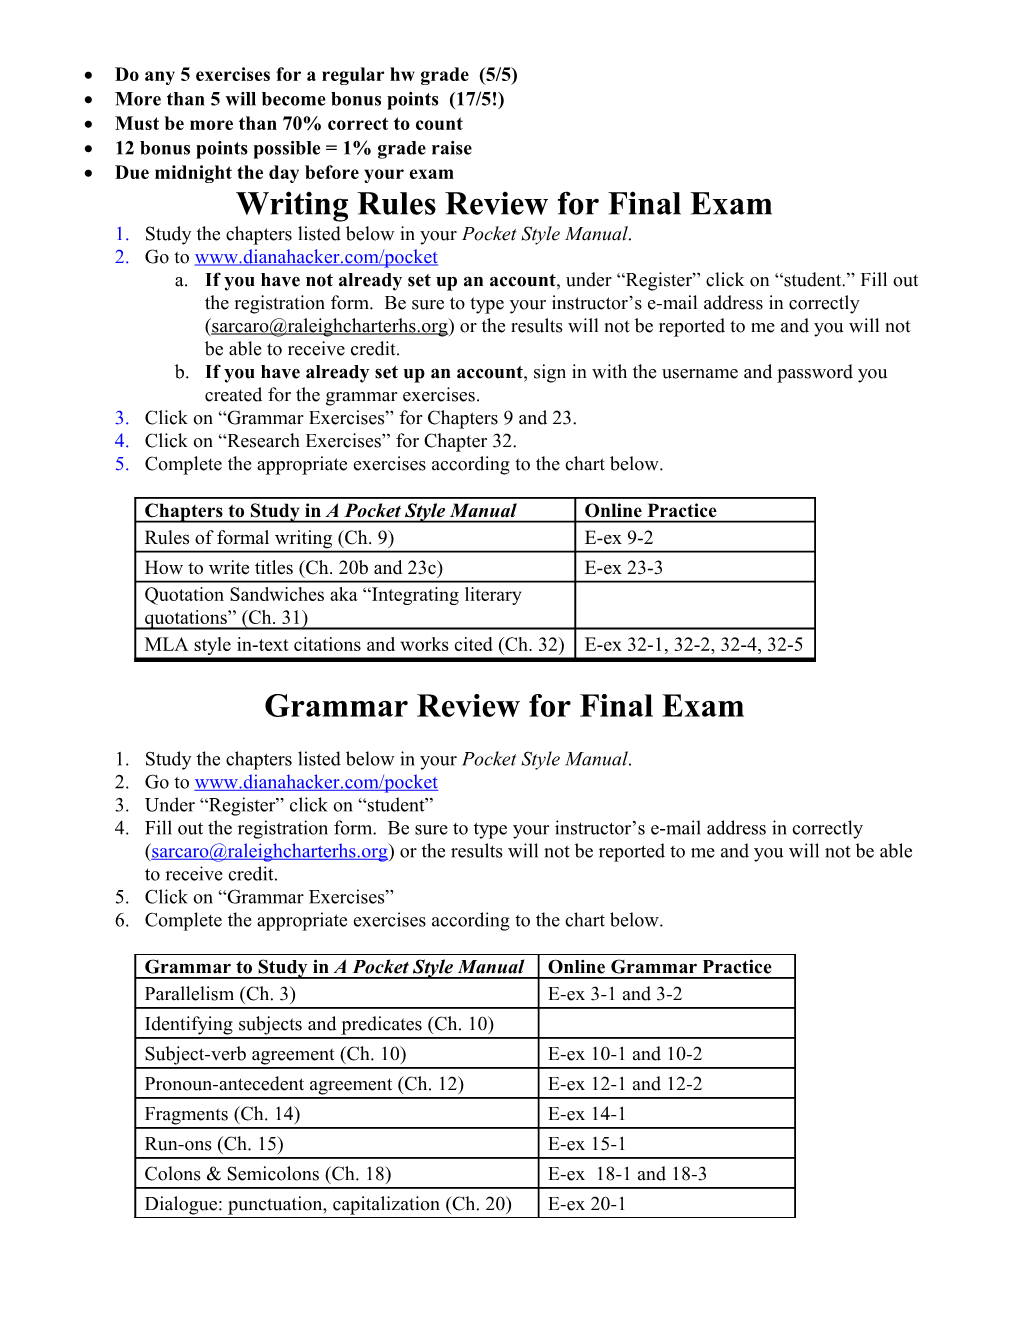 Grammar Review for Final Exam